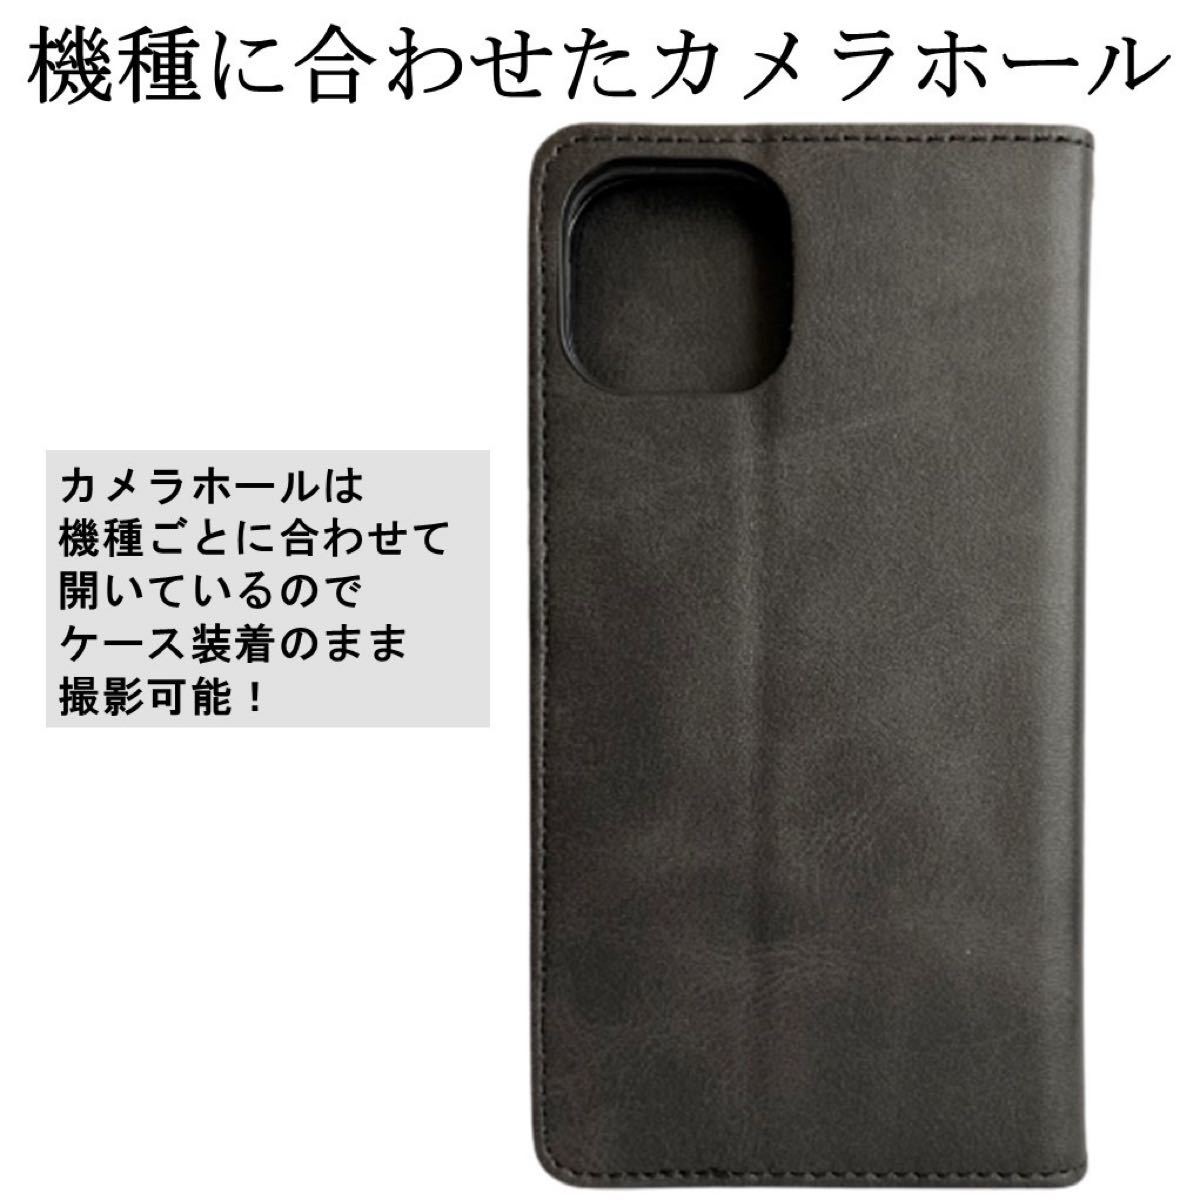 iPhone 13 アイフォン サーティーン 手帳型 スマホカバー スマホケース ポケット レザー シンプル オシャレ ブラック